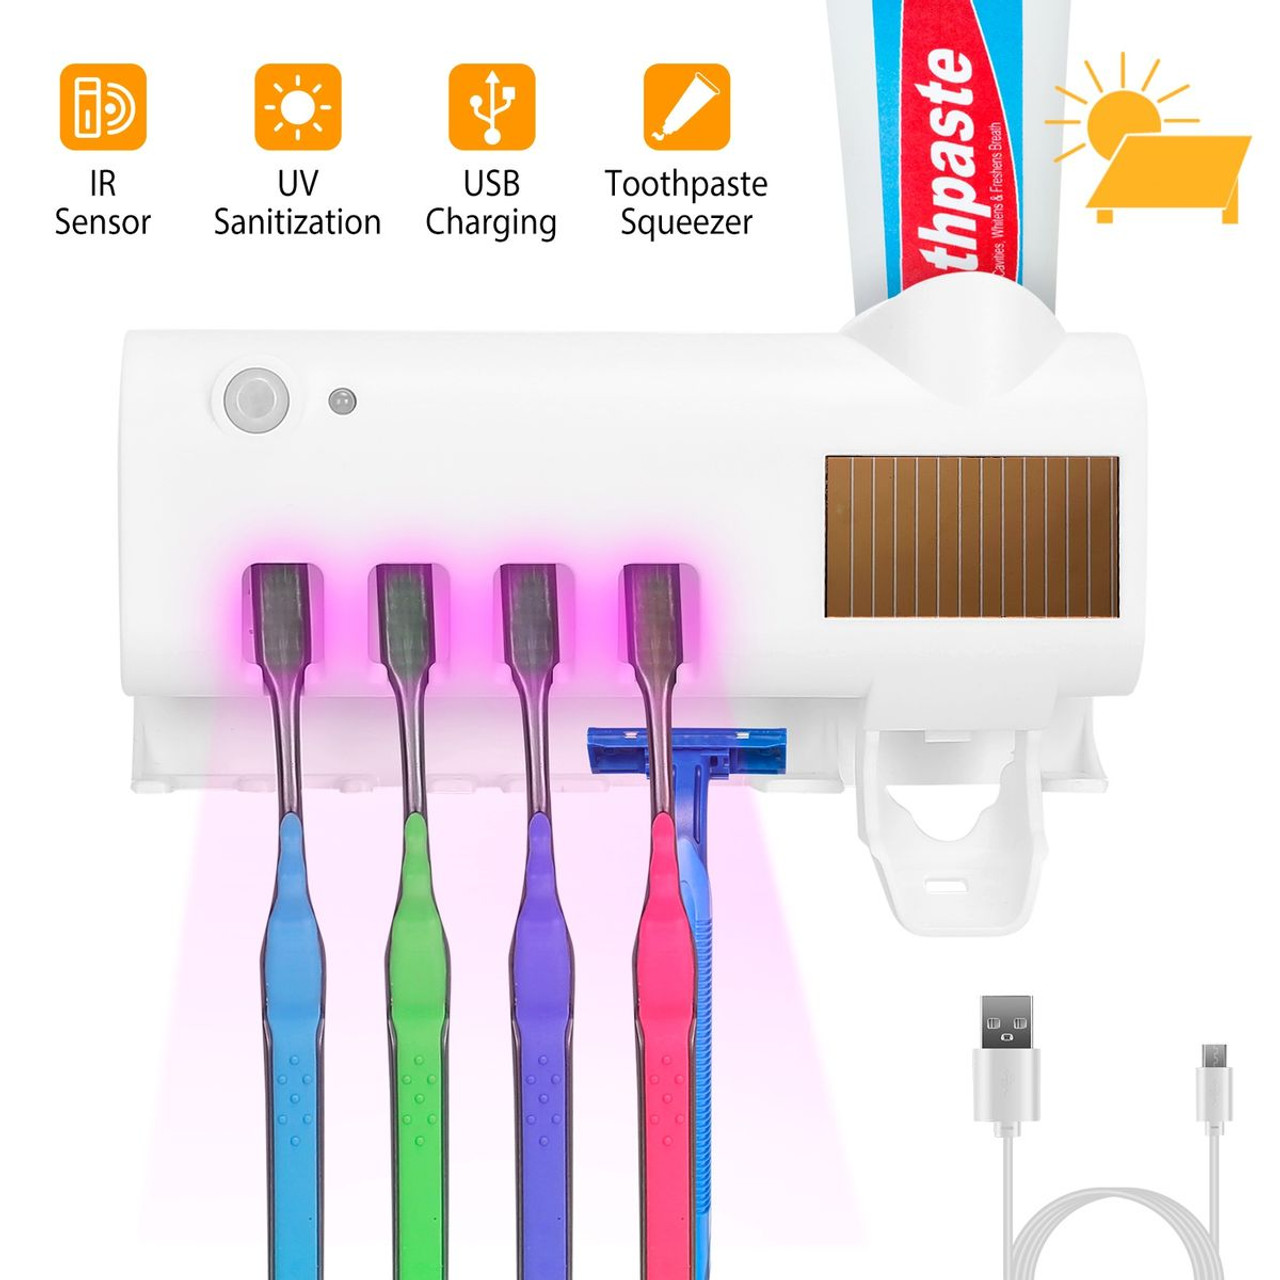 iMounTEK® Wall-Mounted Toothbrush Holder product image